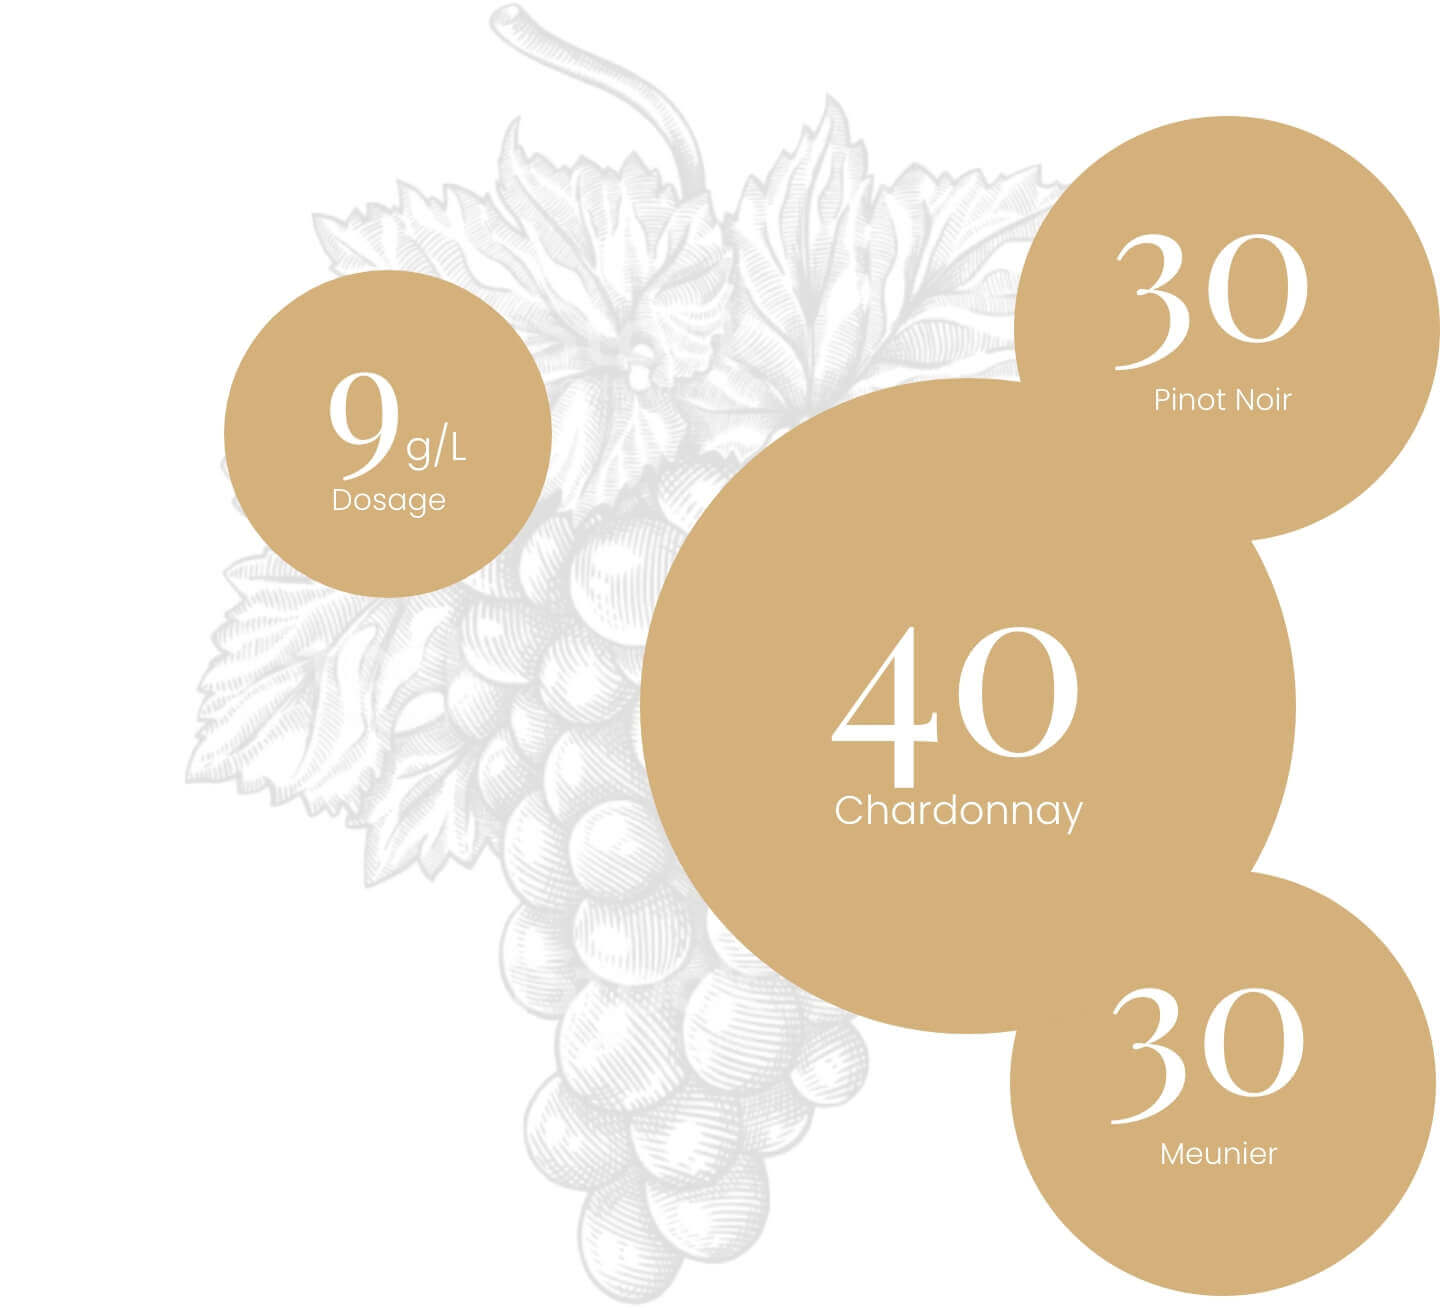 Grape varieties-Champagne